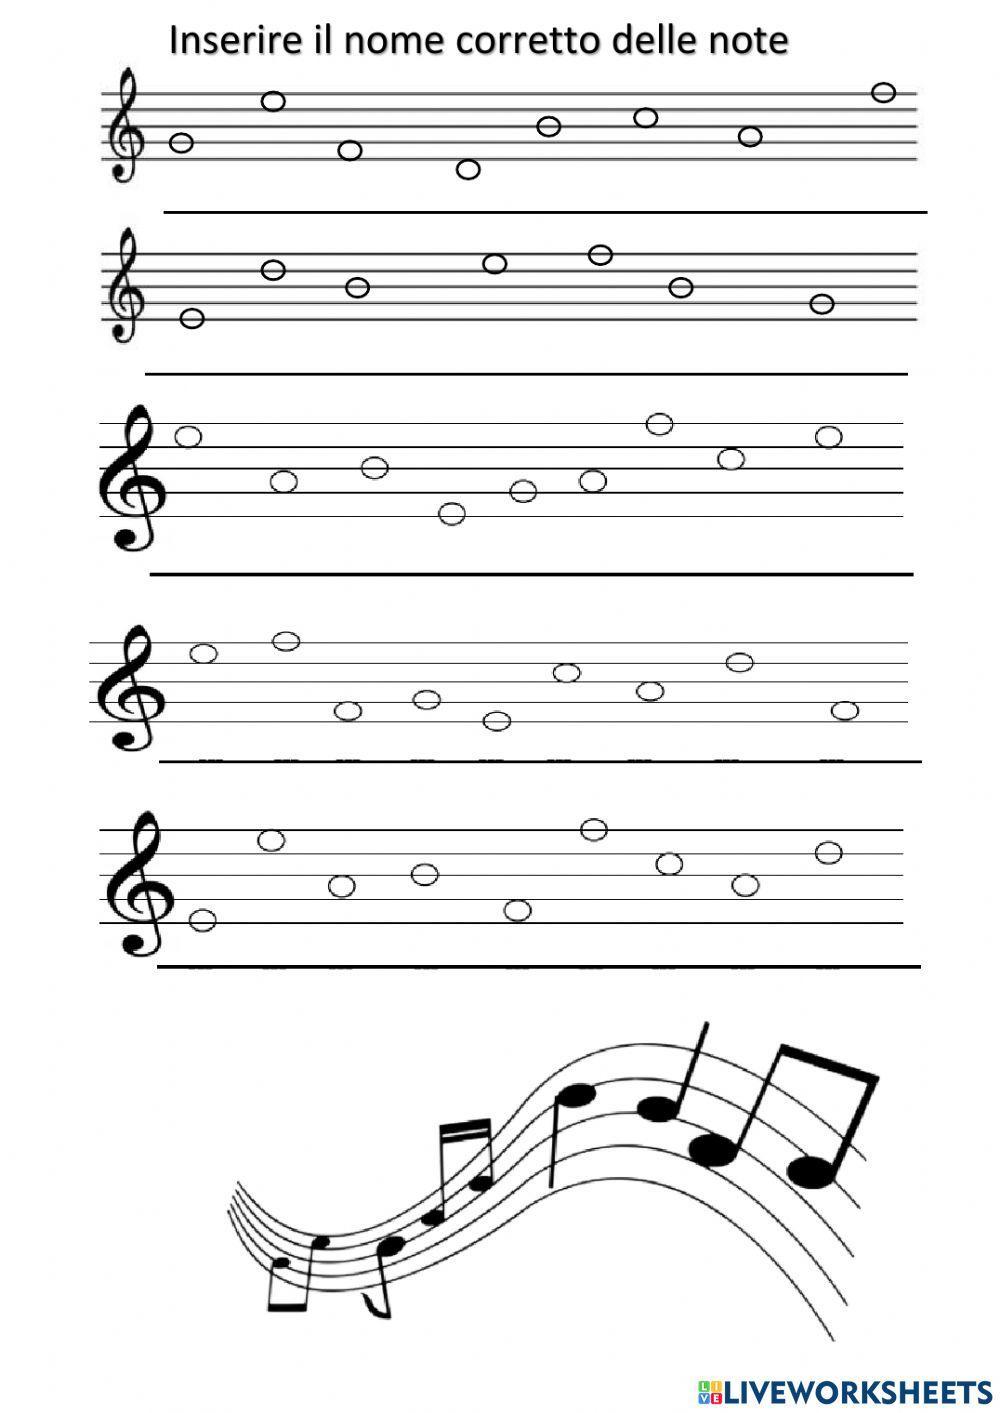 Le note musicali activity